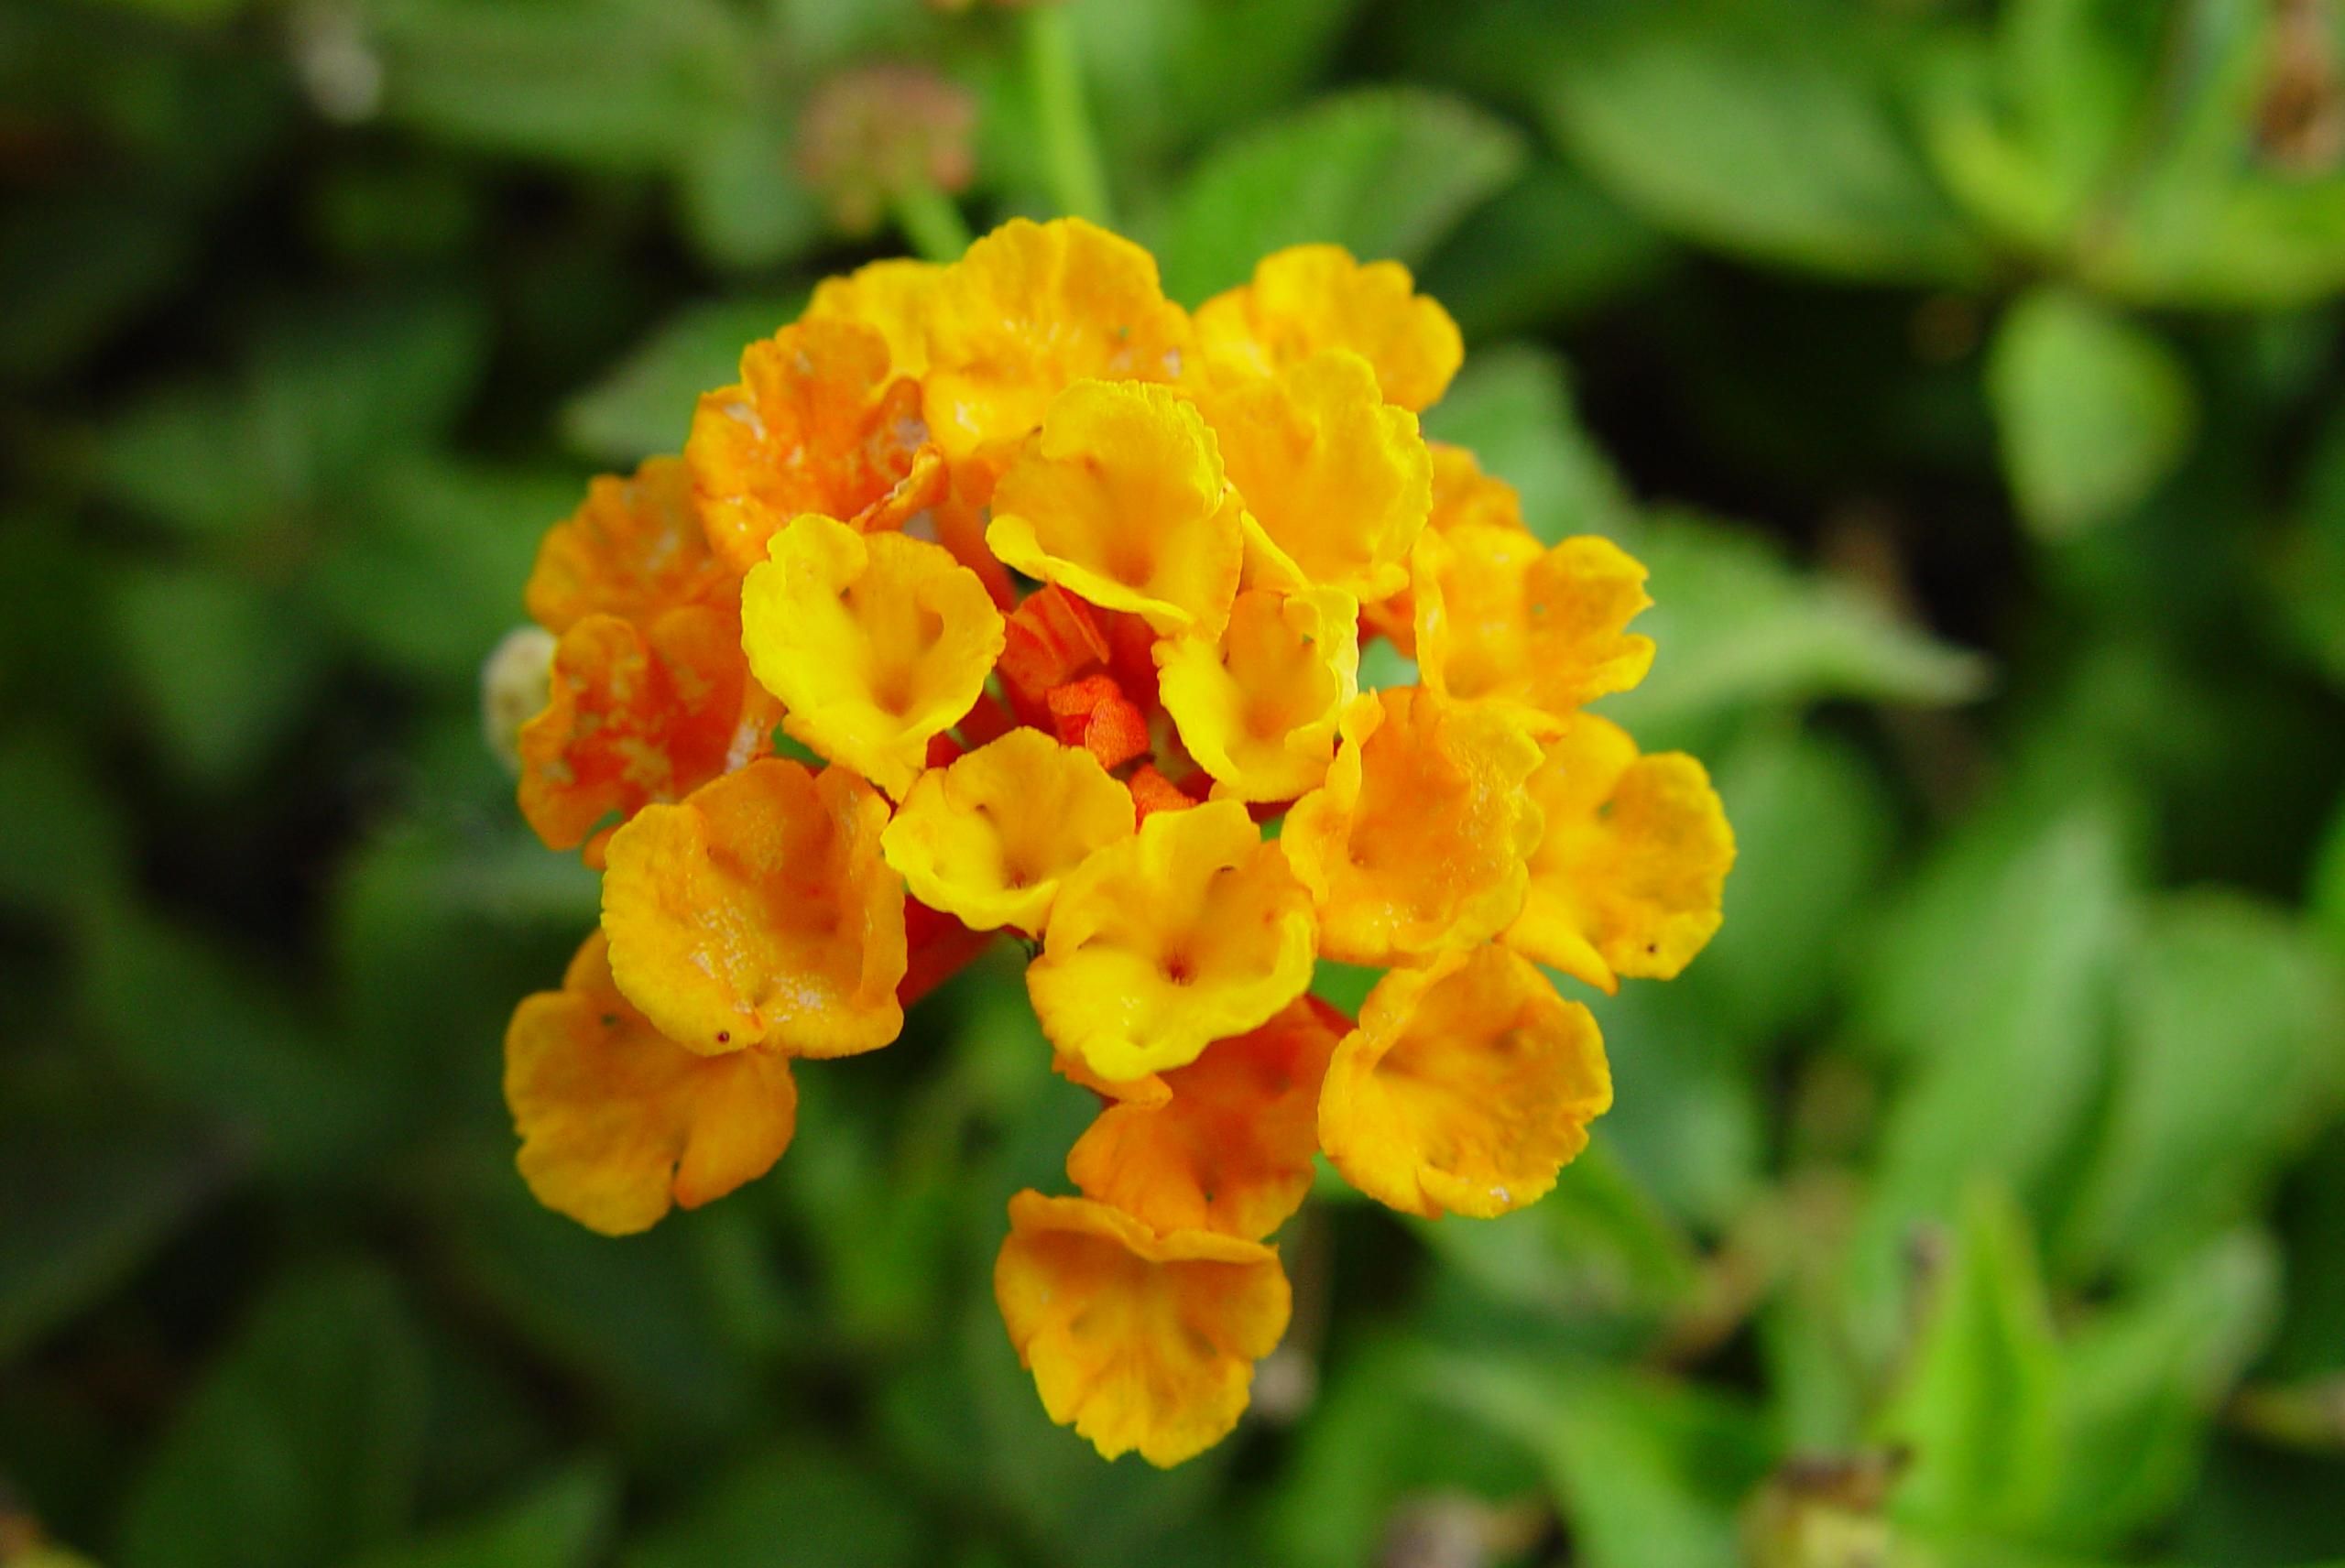 Image libre: petites fleurs oranges